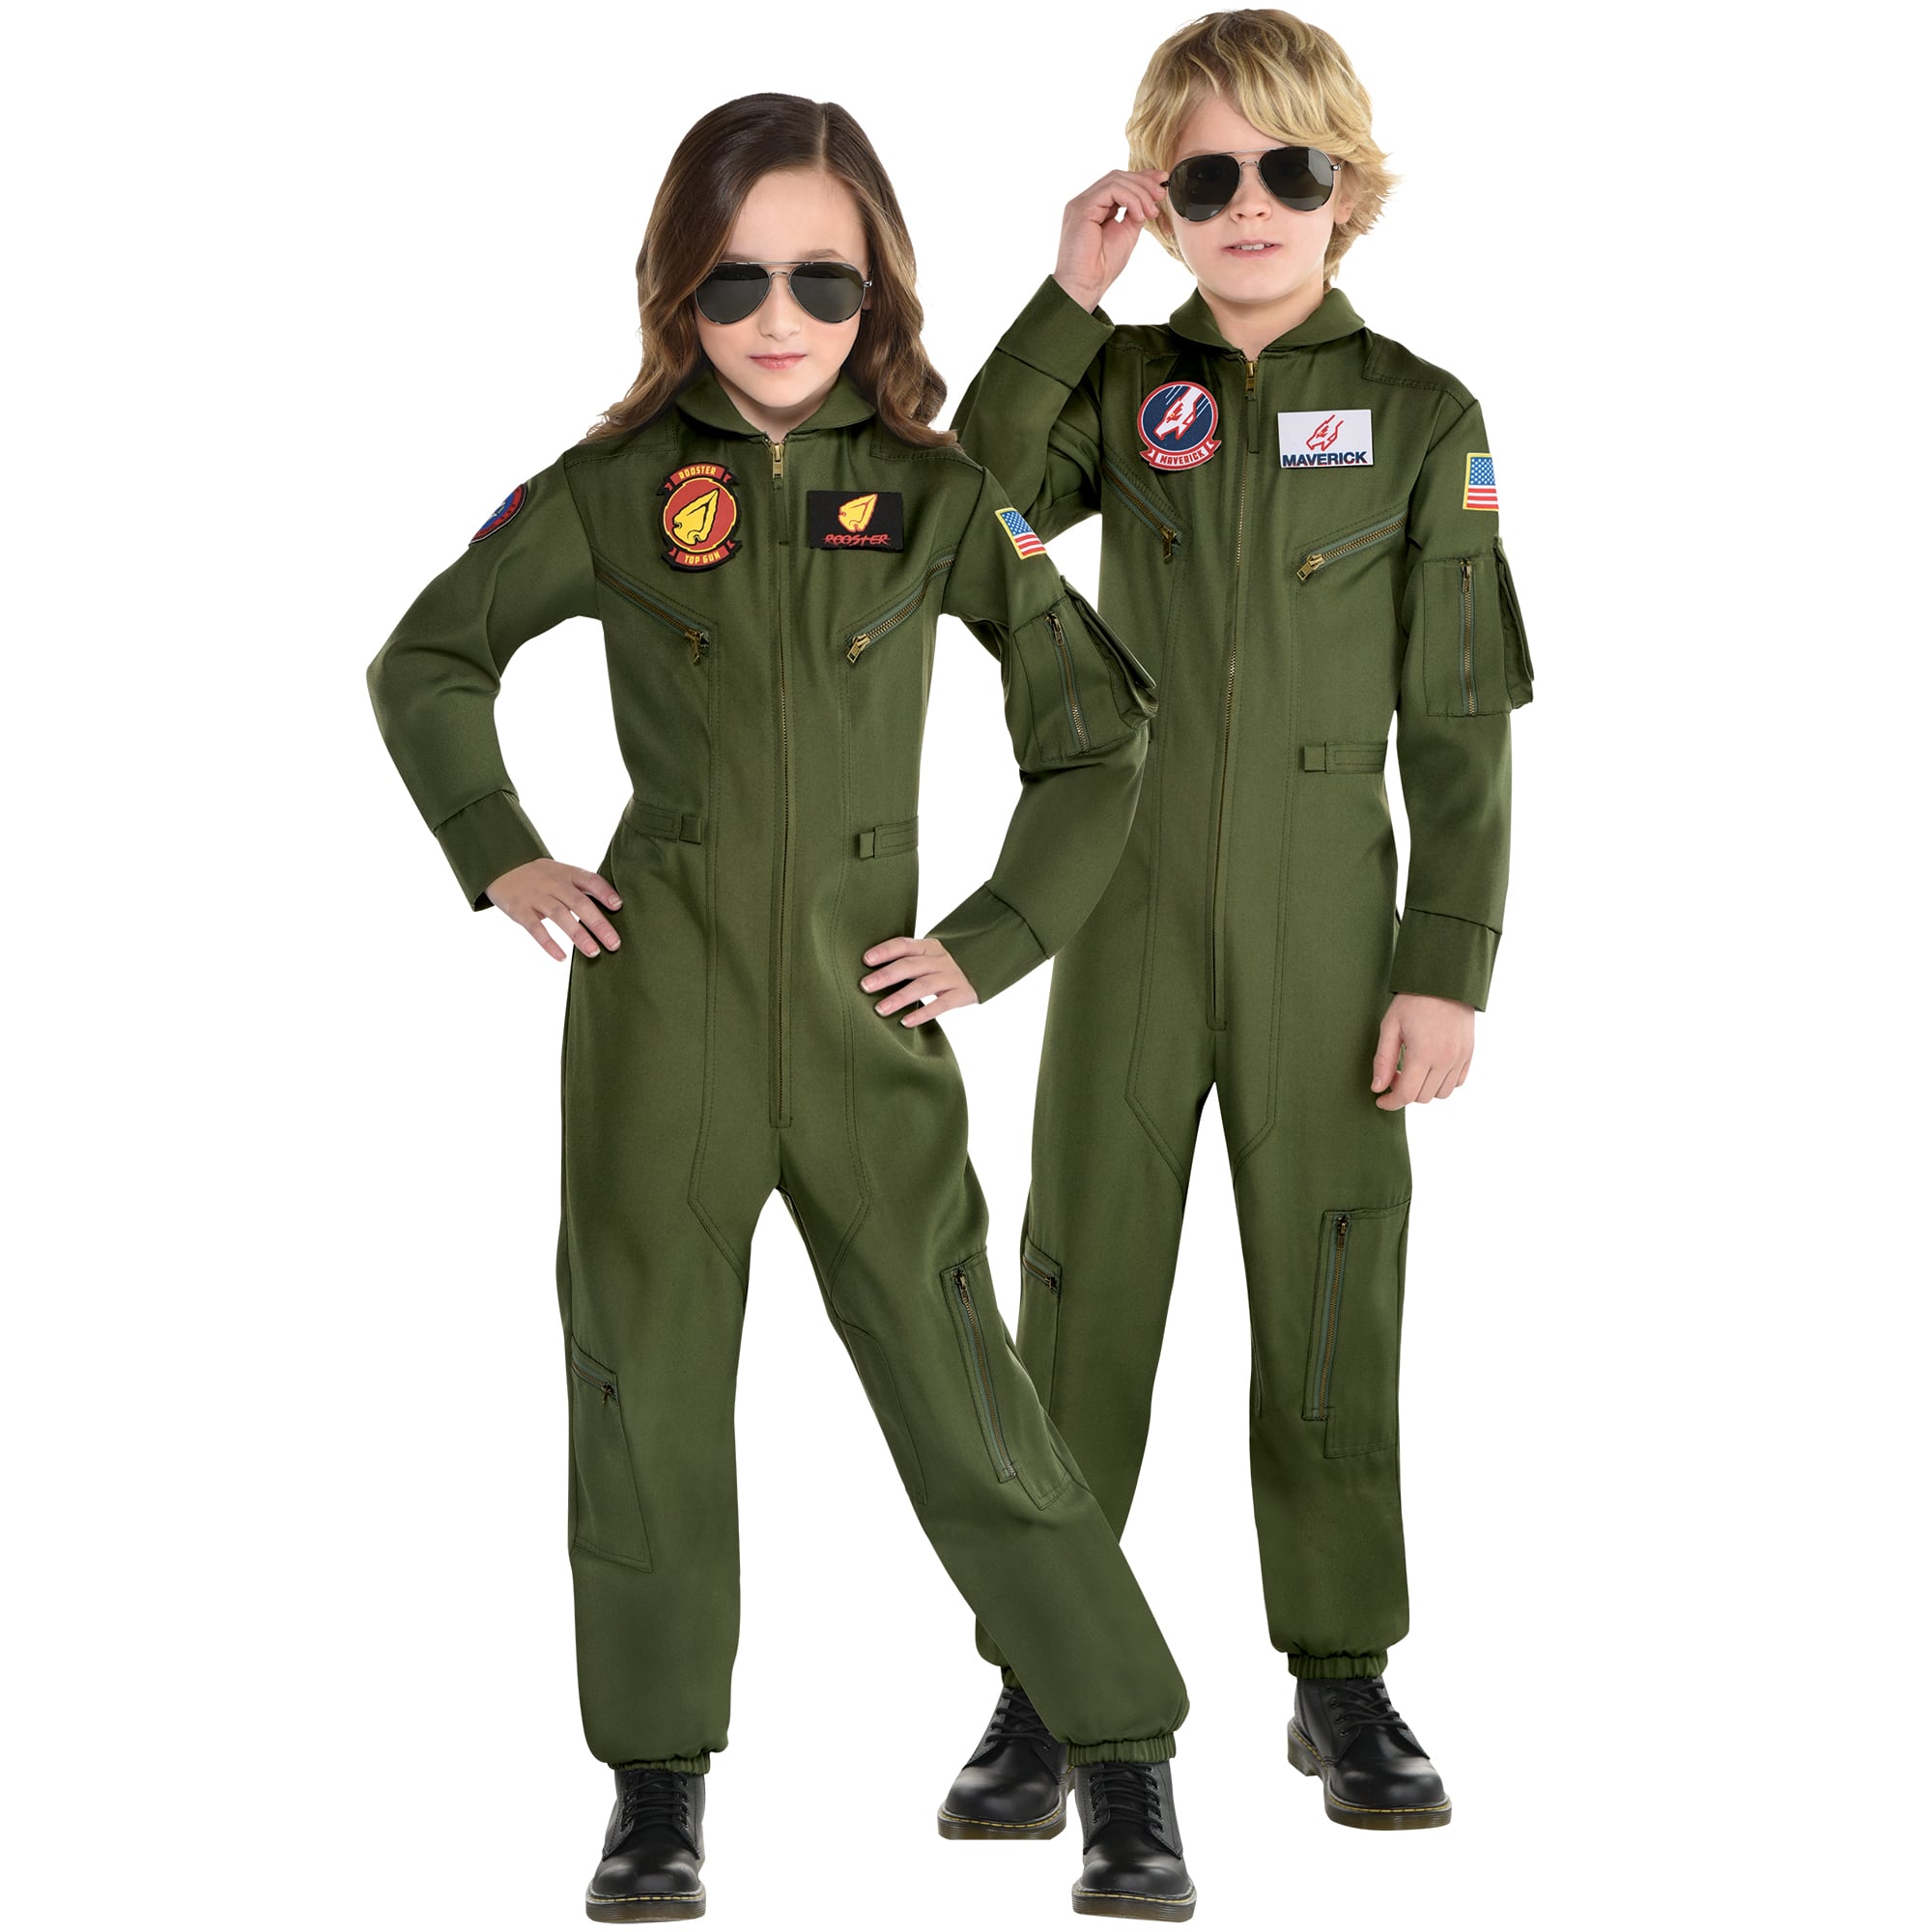 Top Gun Maverick: Flight Suit Child Costume